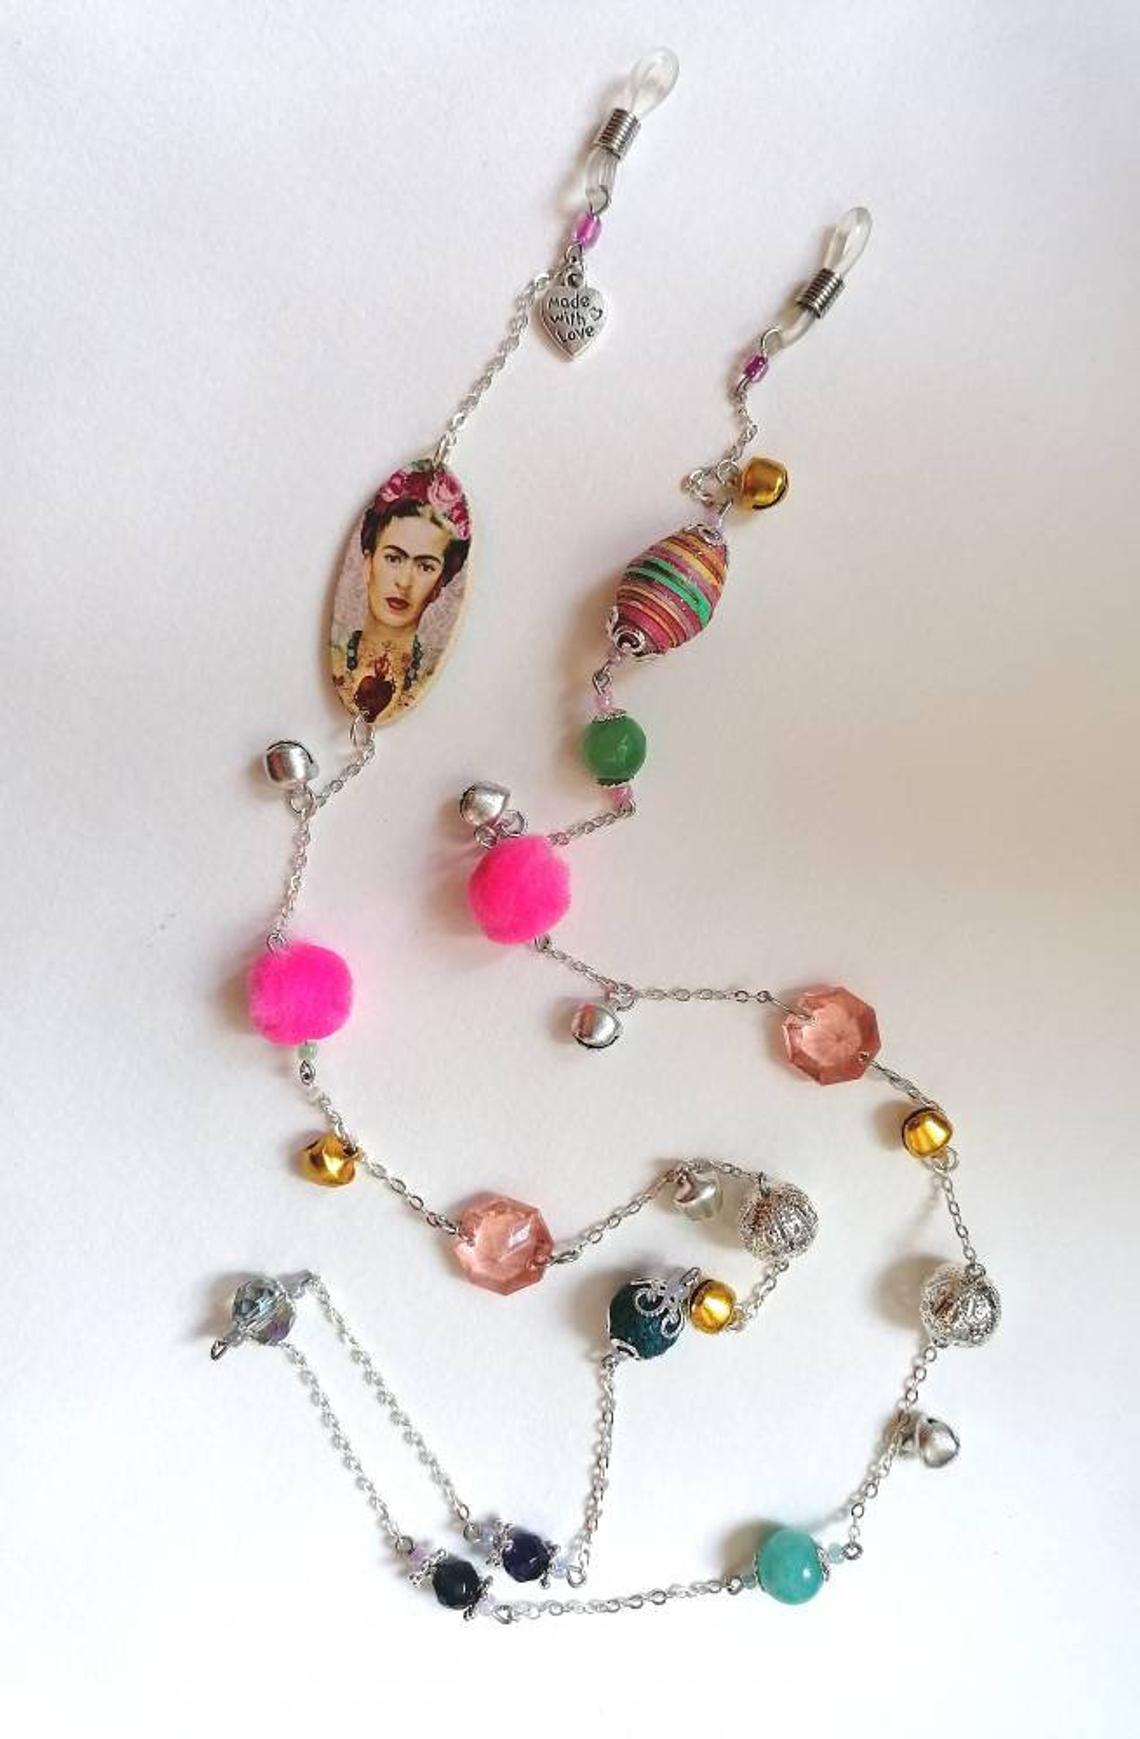 Frida boutique collection - Frida Kahlo glass chain holder